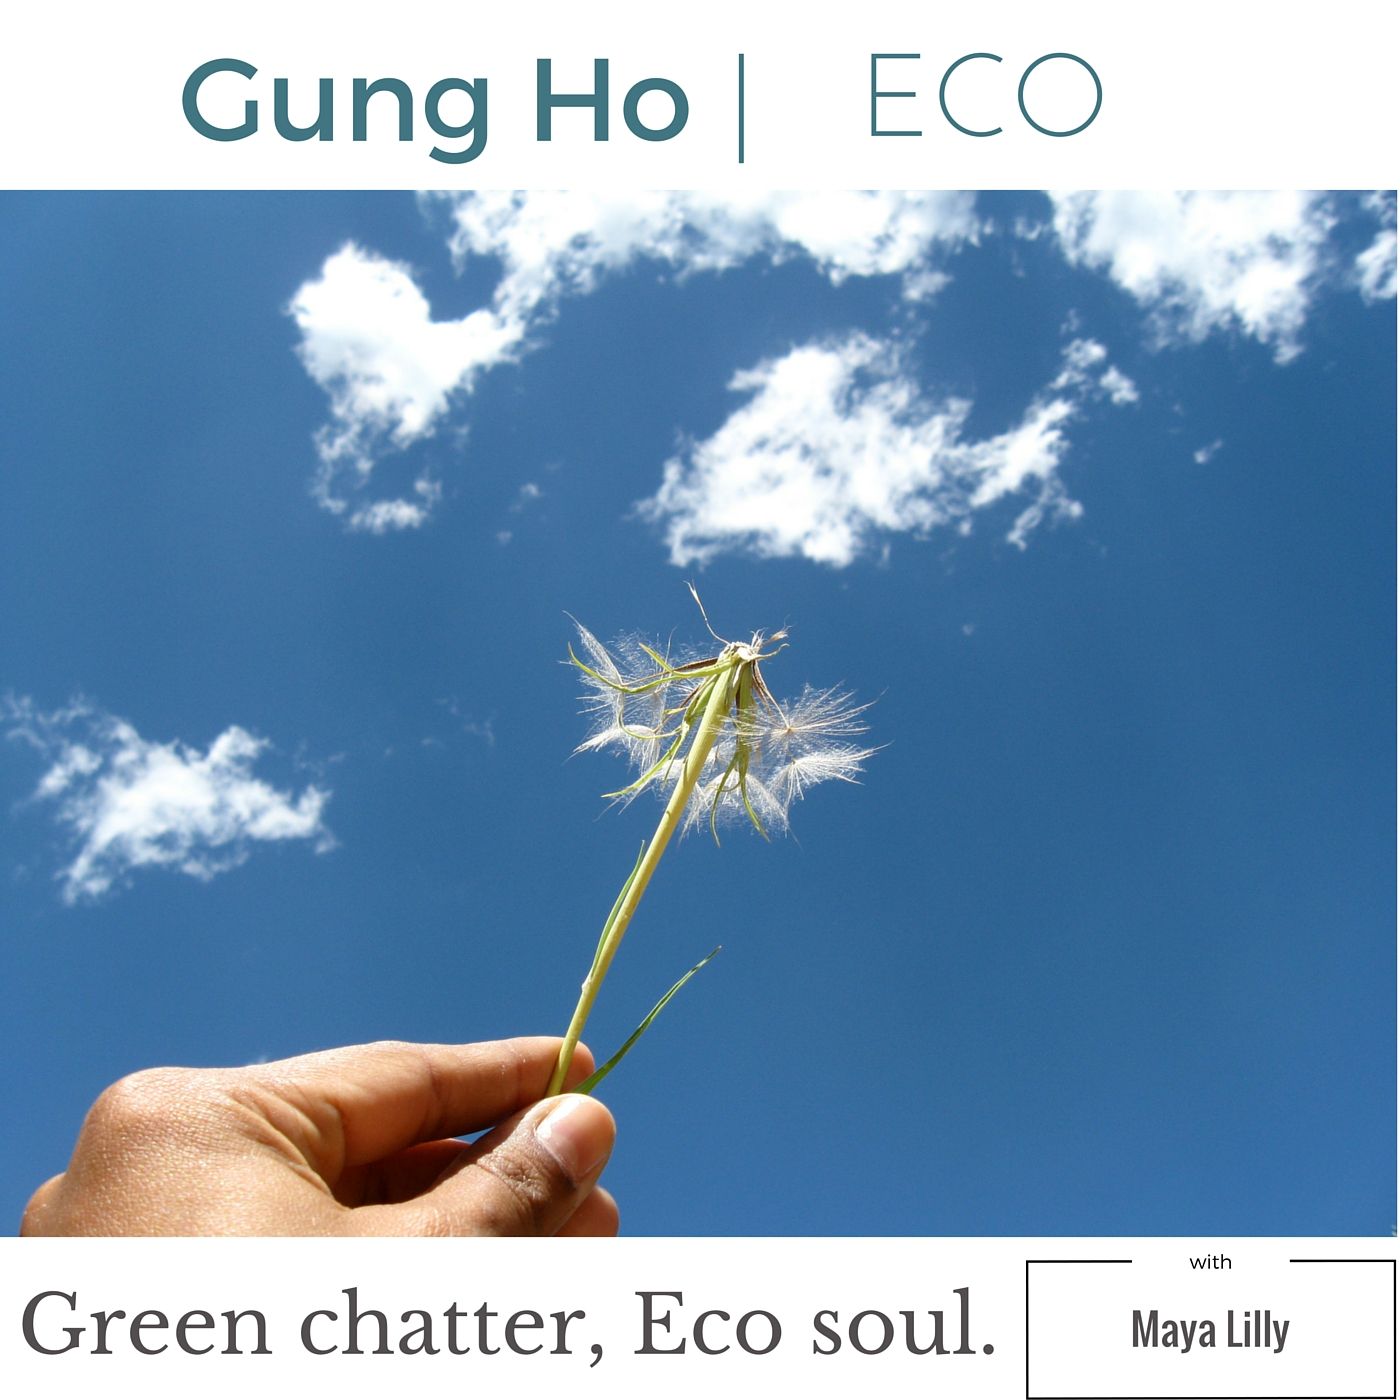 GungHo Eco